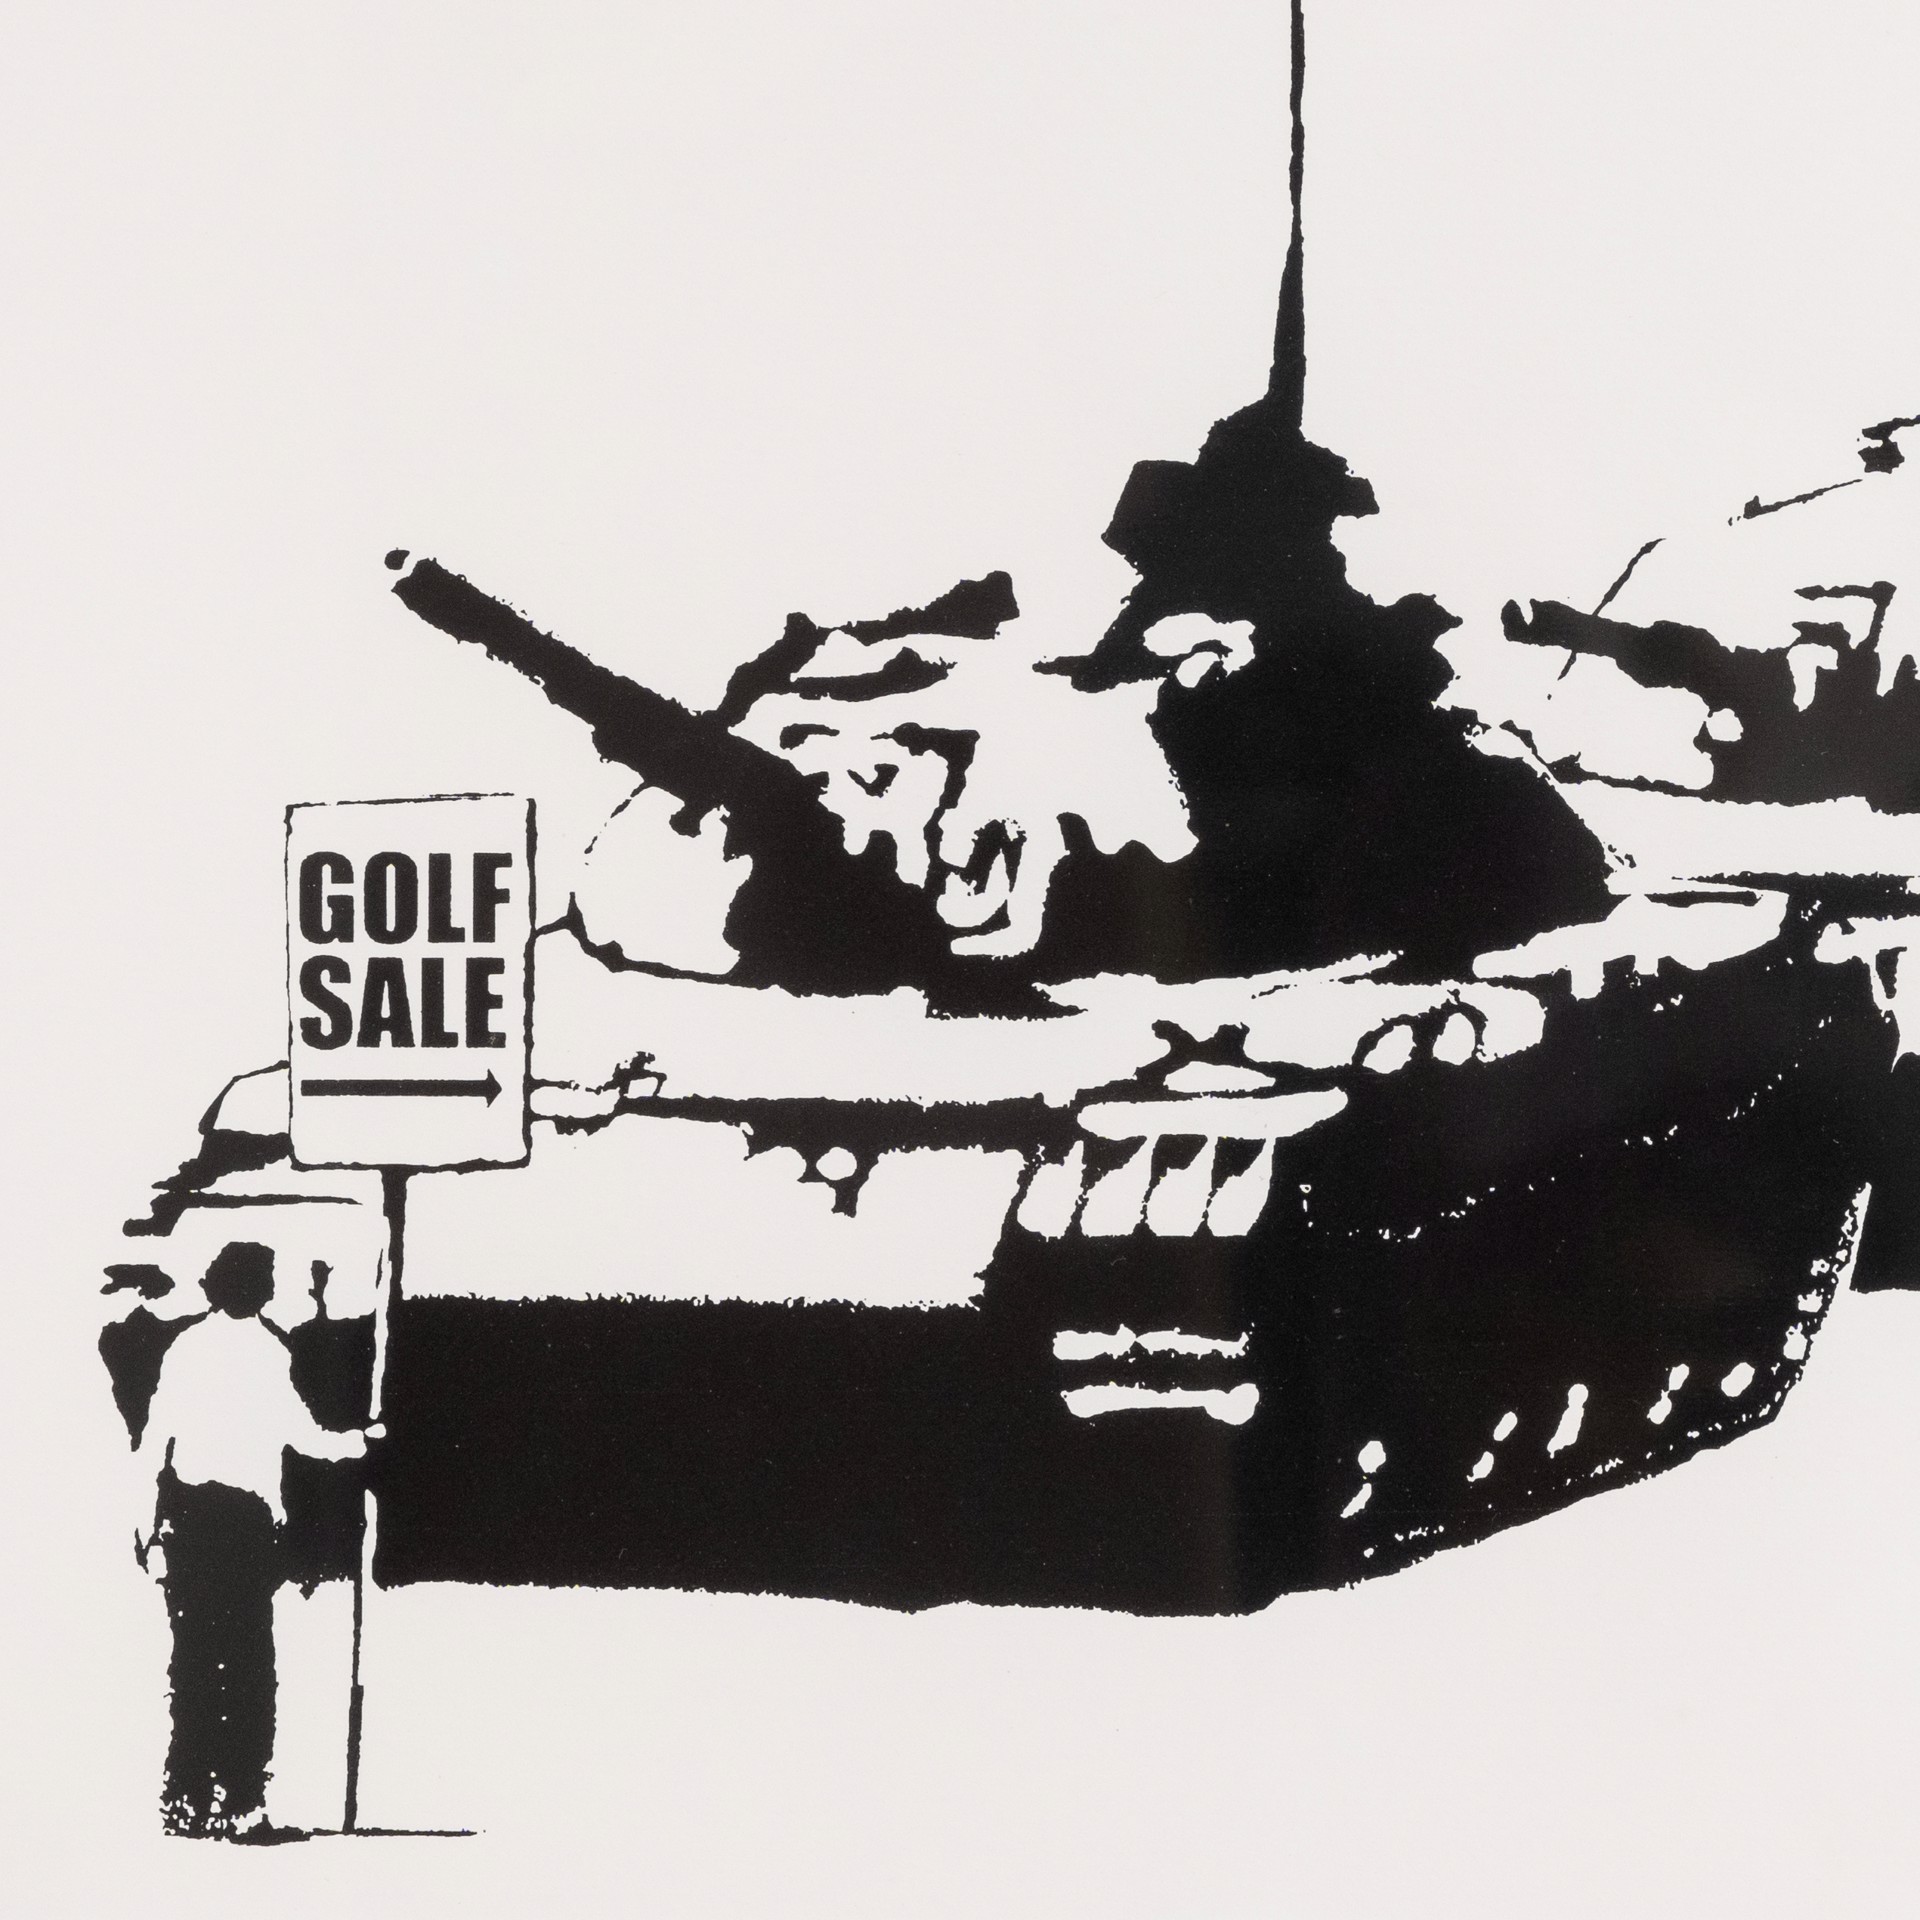 Golf Sale by Banksy